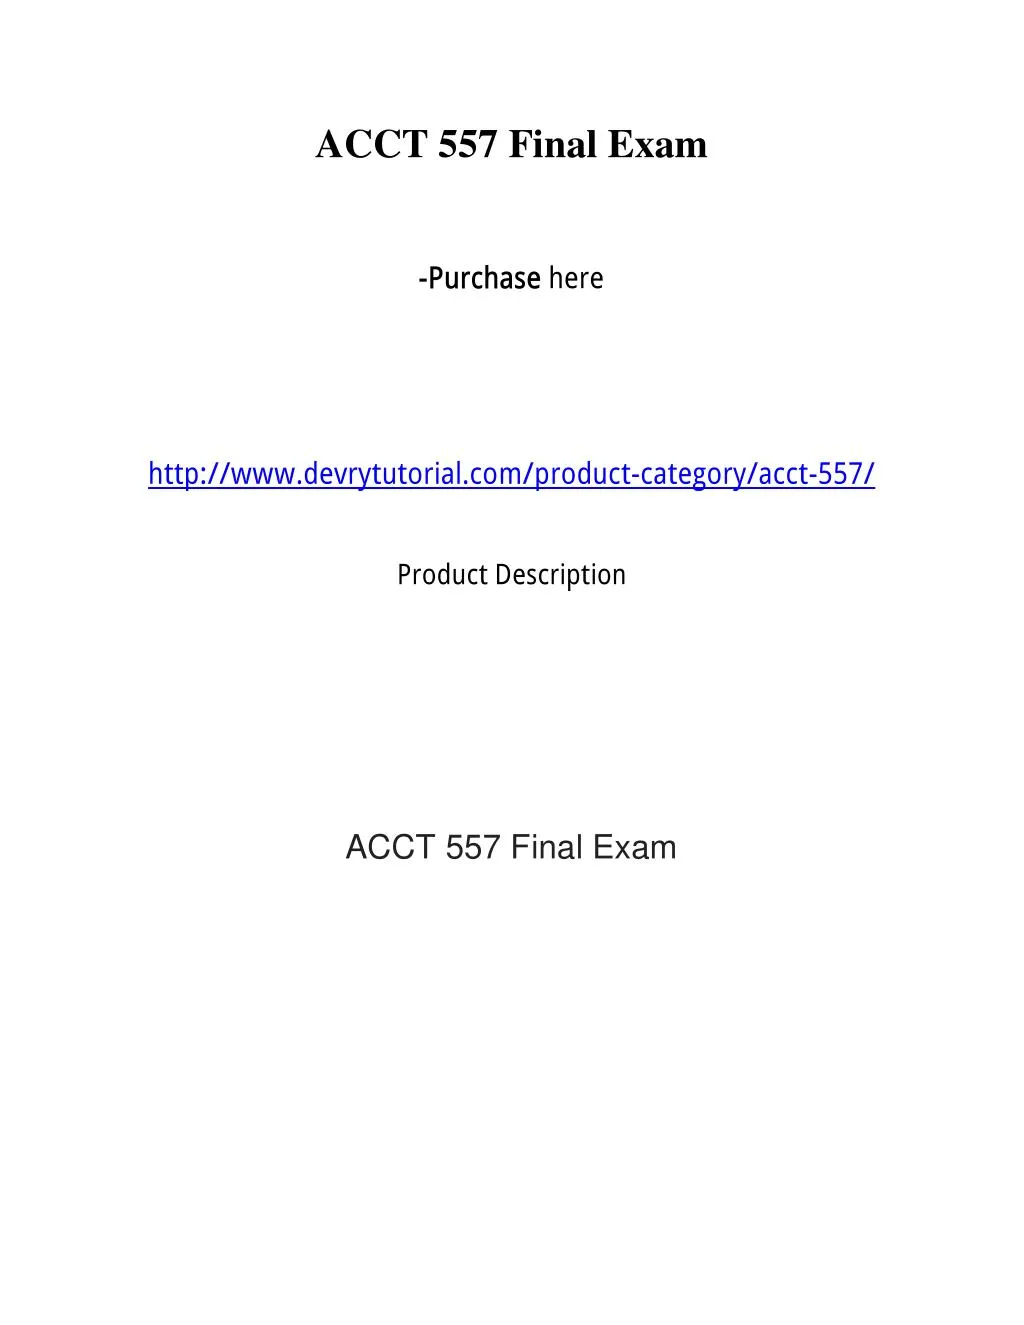 acct 557 final exam